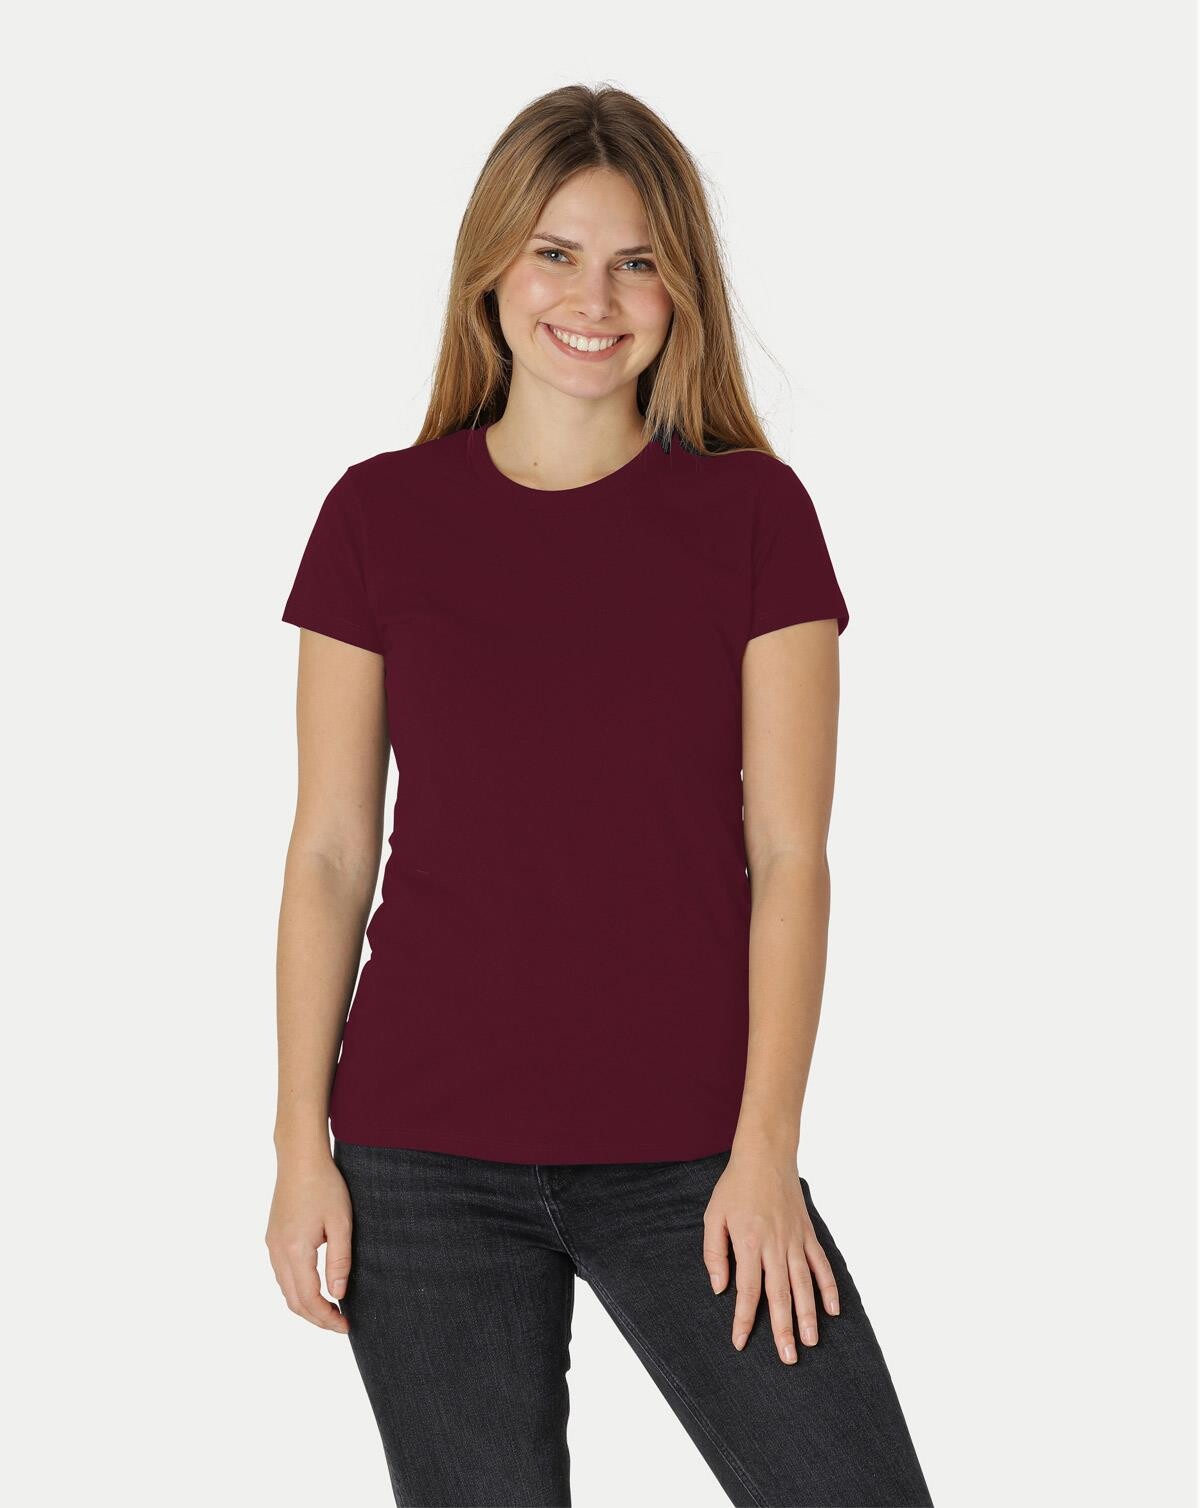 Neutral Økologisk Dame Tætsiddende T-Shirt (Bordeaux, XS)